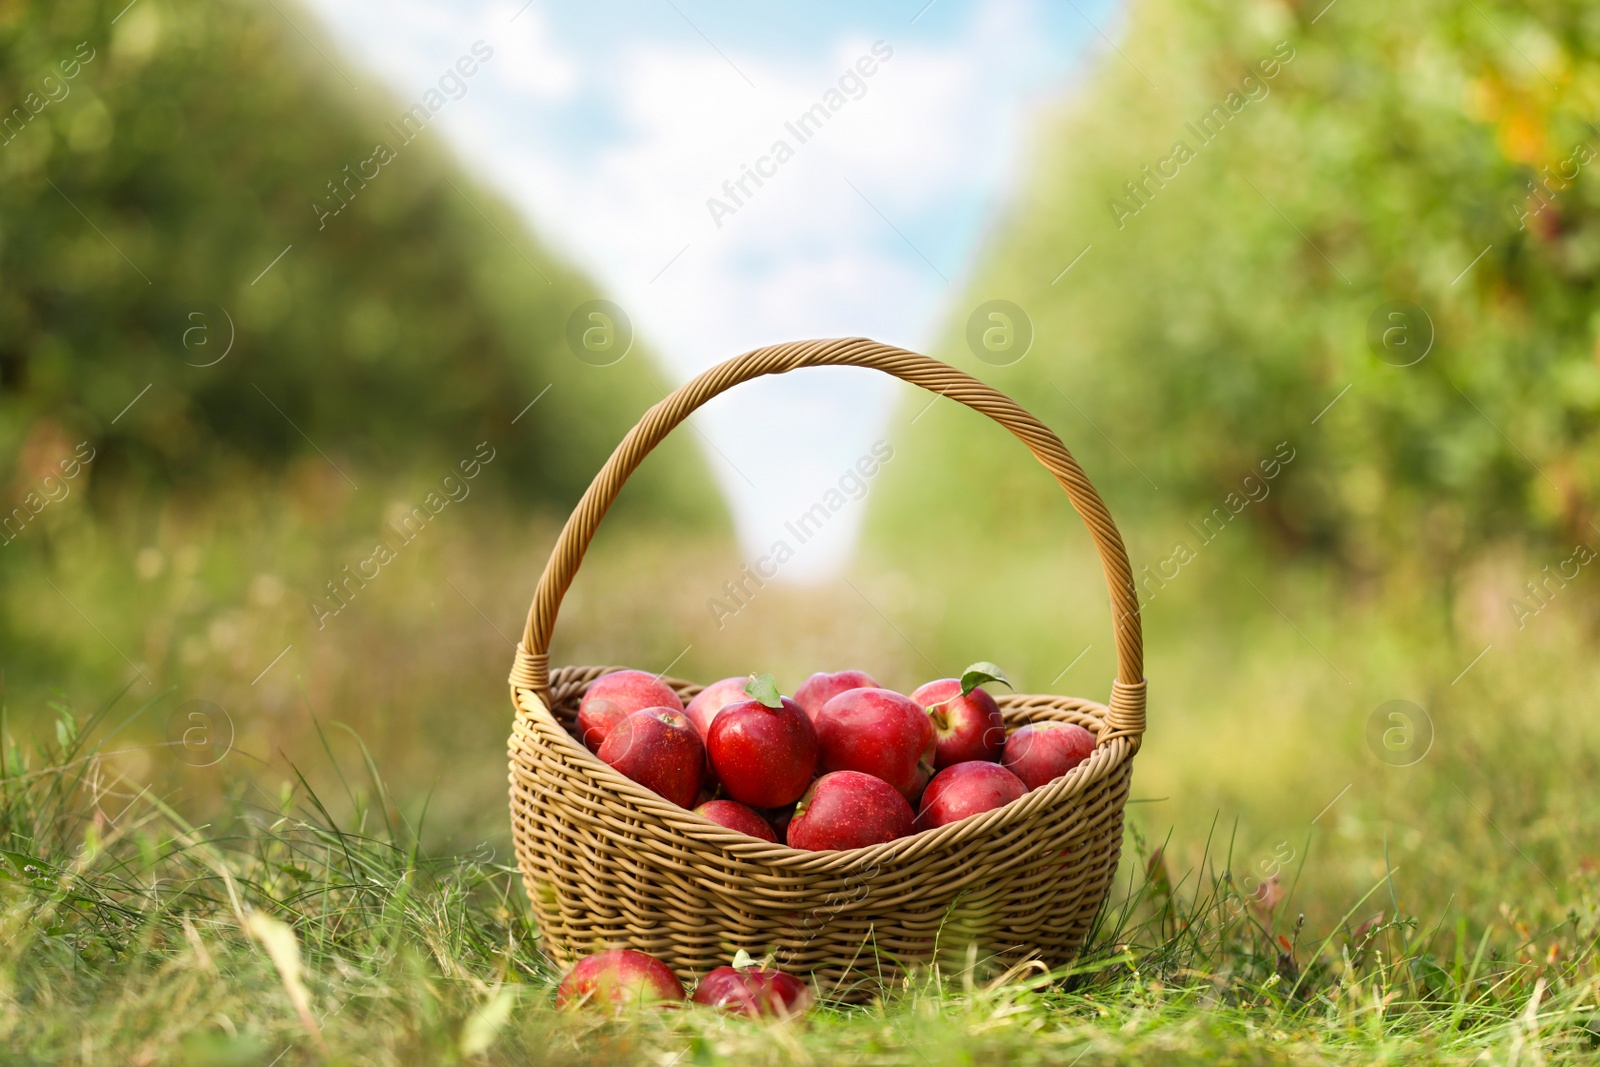 Photo of Wicker basket with ripe apples in garden